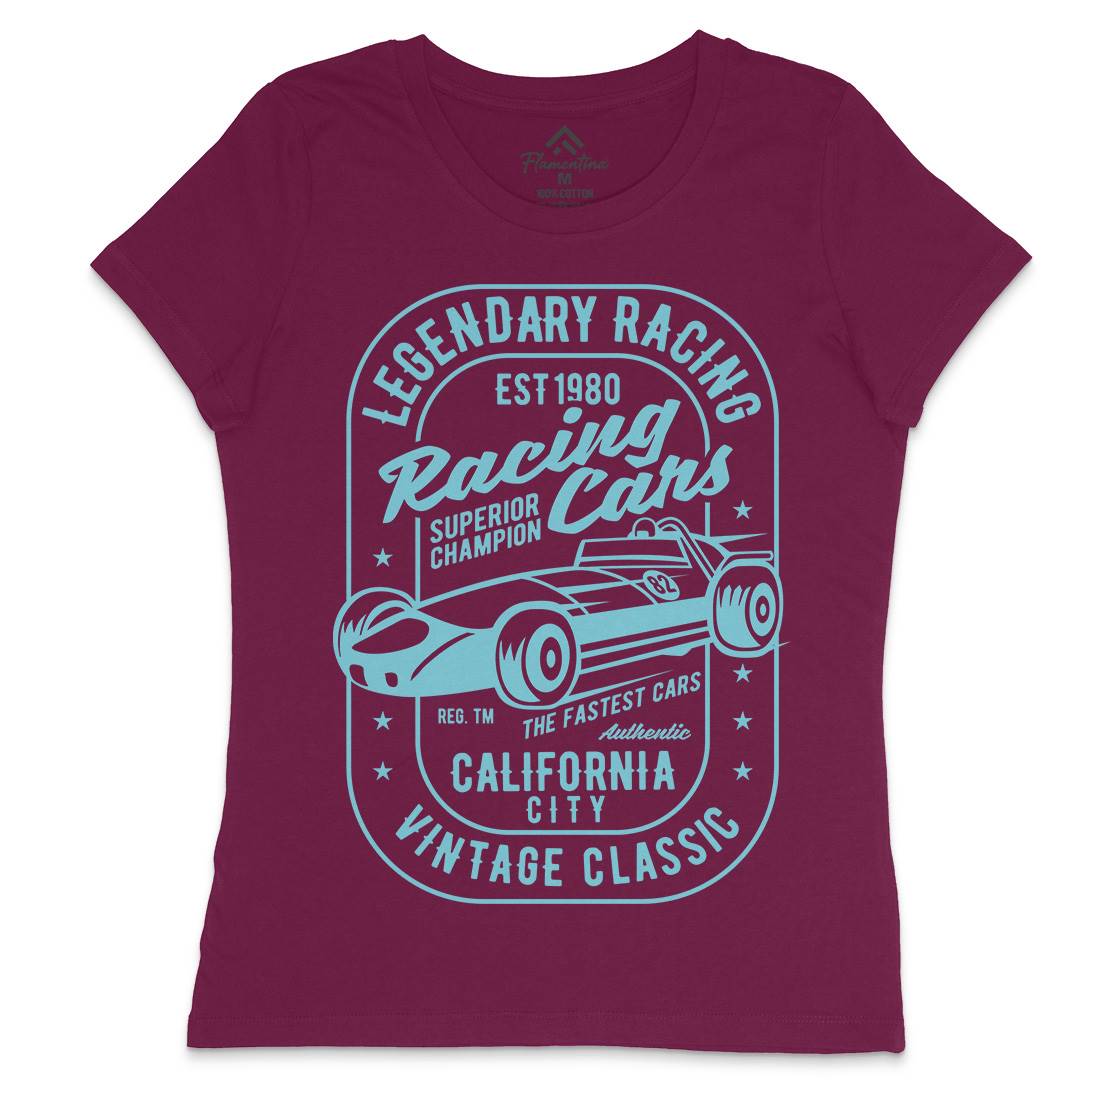 Legendary Racing Cars Womens Crew Neck T-Shirt Cars B414